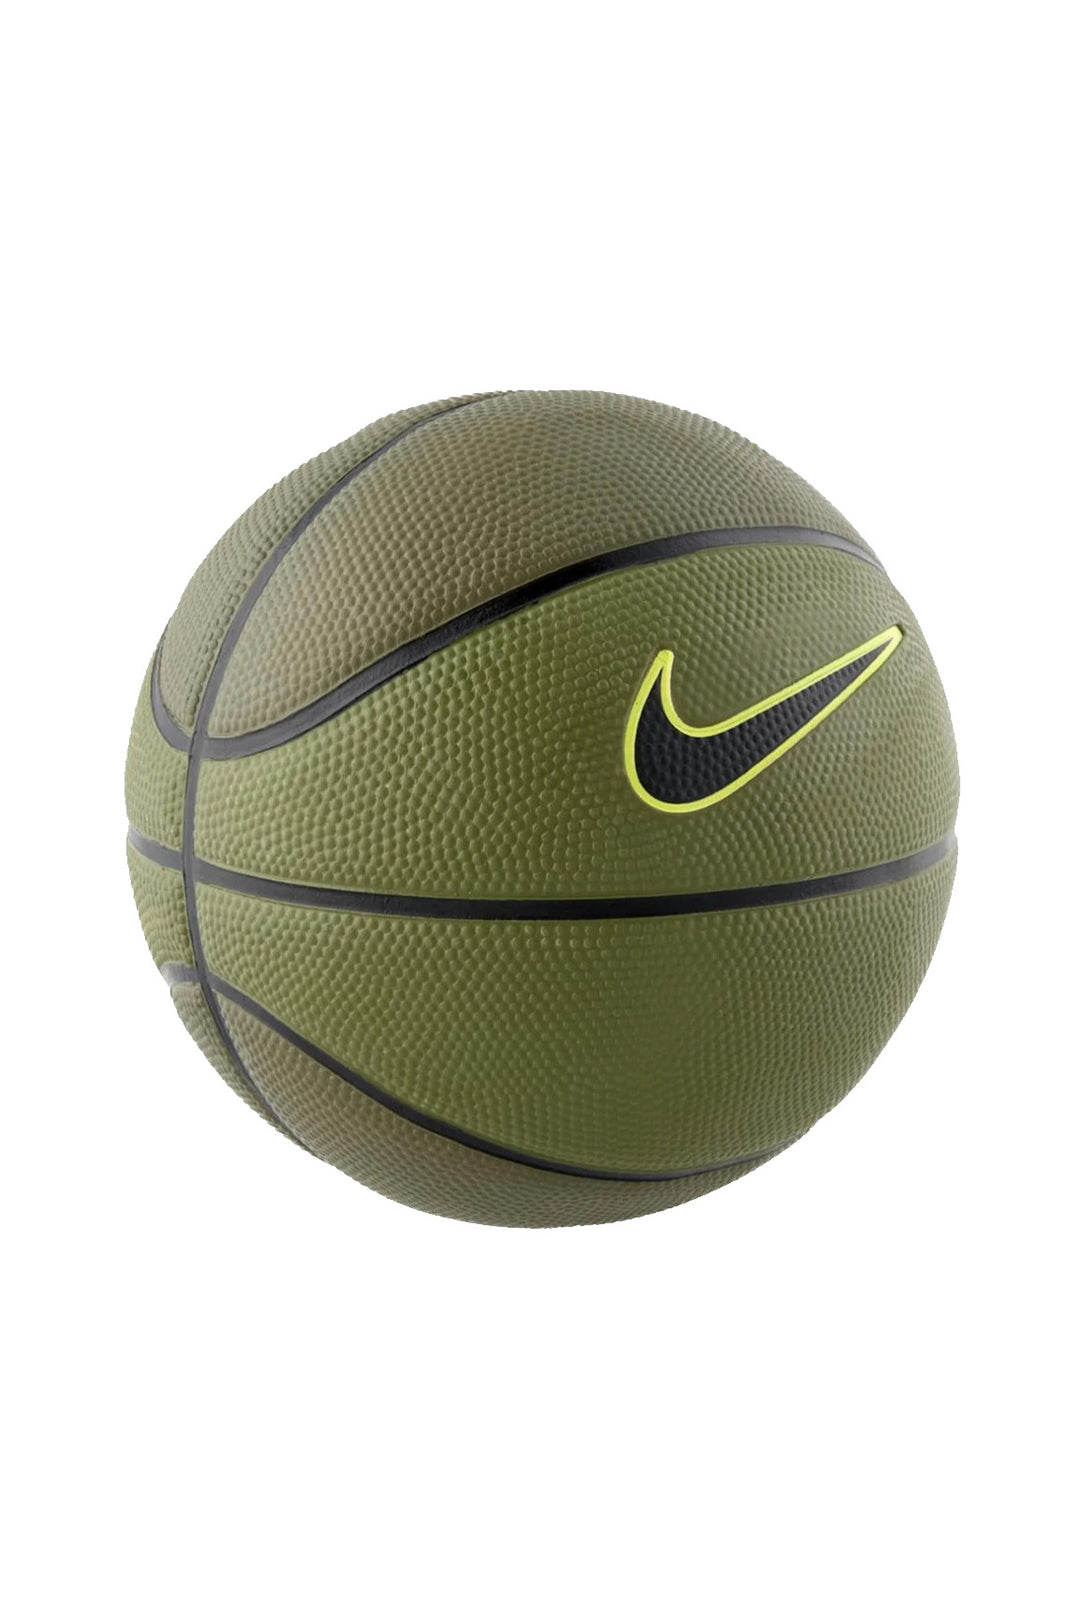 Nike Skills Gym Size 3 Basketball - Olive Pilgrim